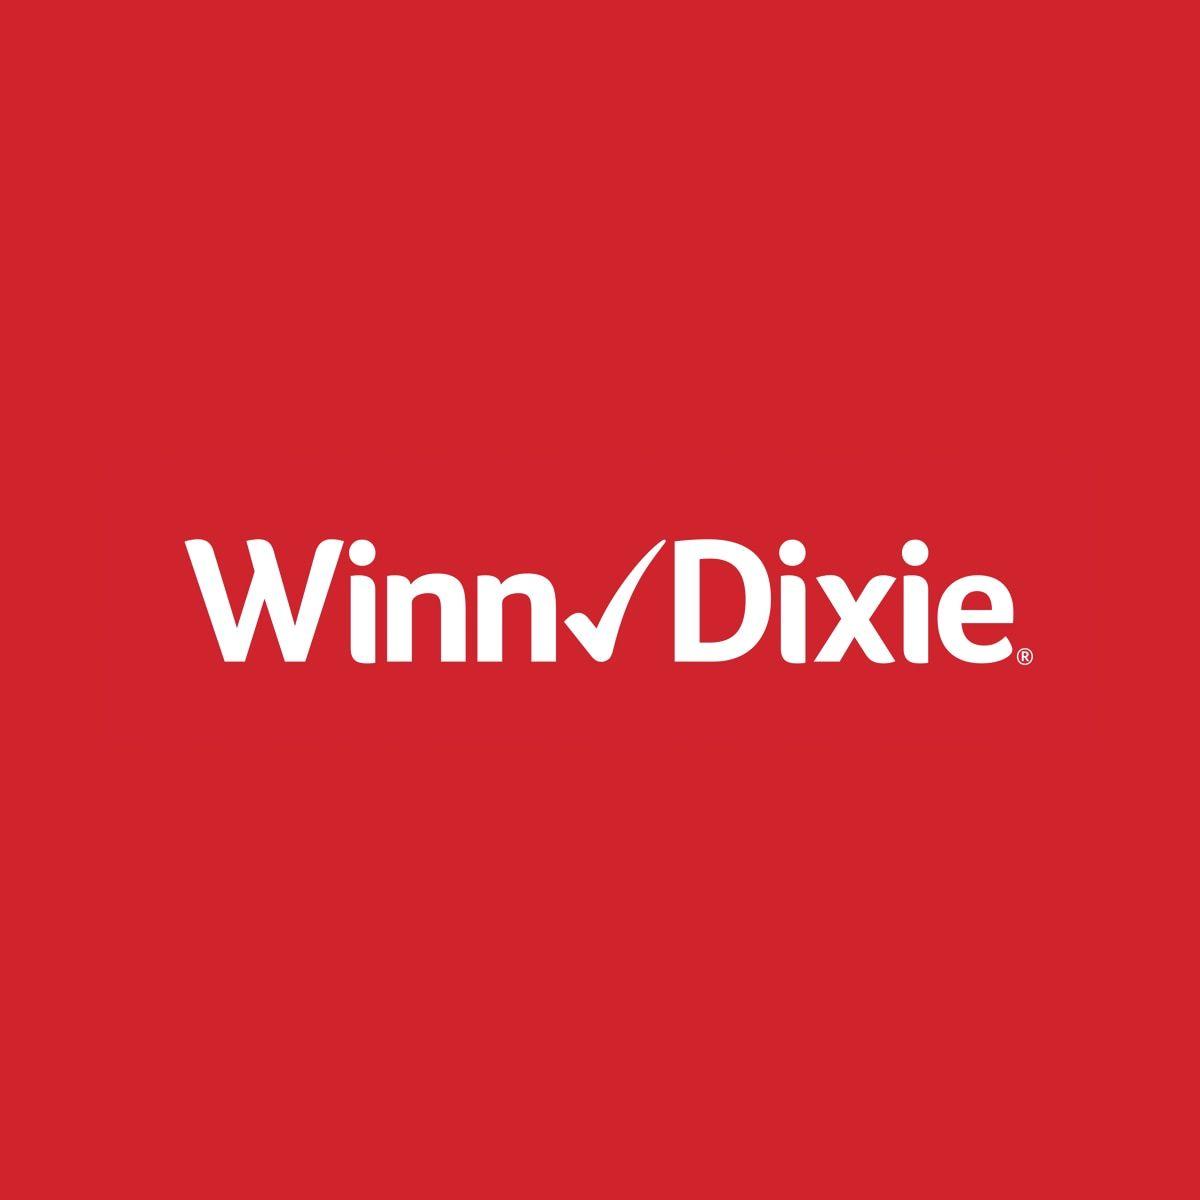 Dixie Logo - Winn Dixie. Serving The Southeast Since 1925